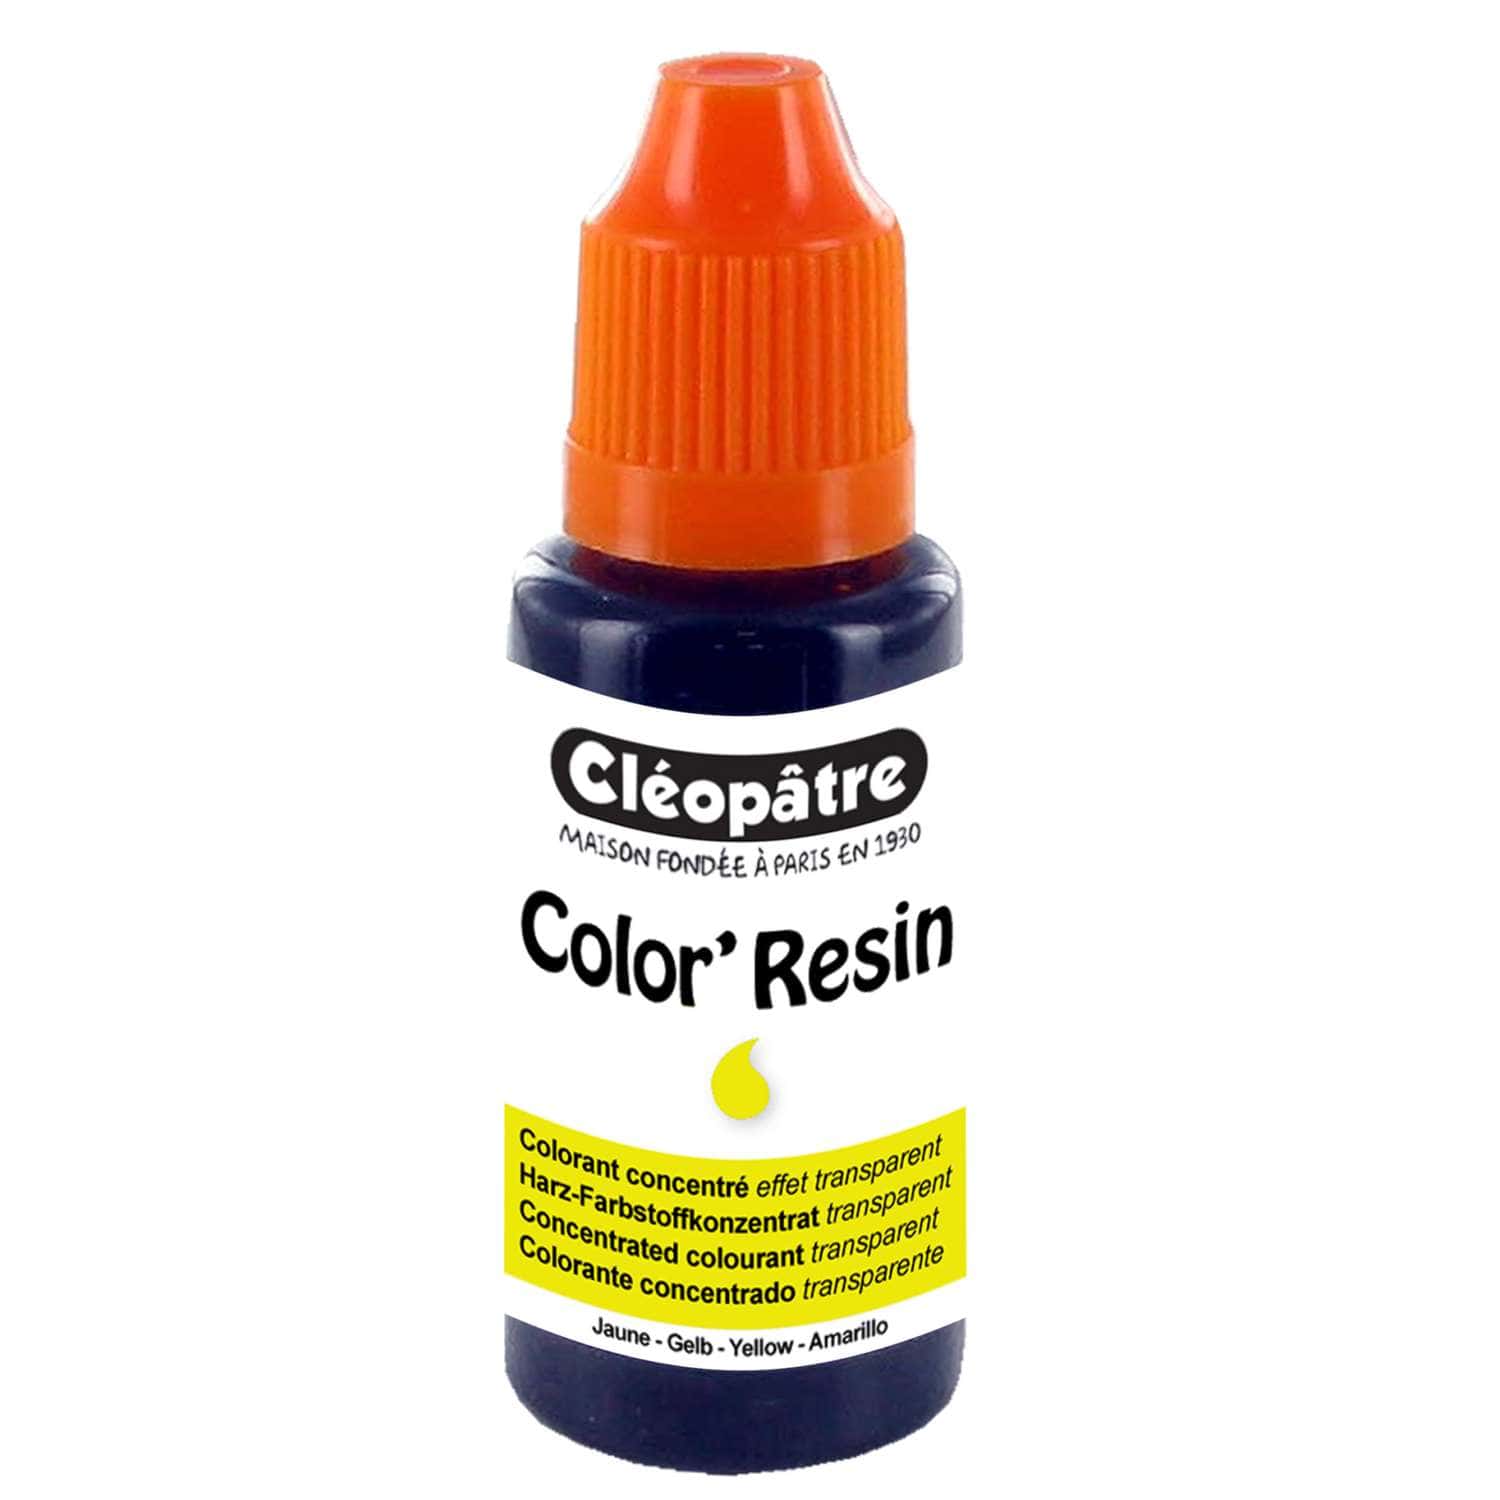 Cléopâtre - Color'Resin, Colori per resina